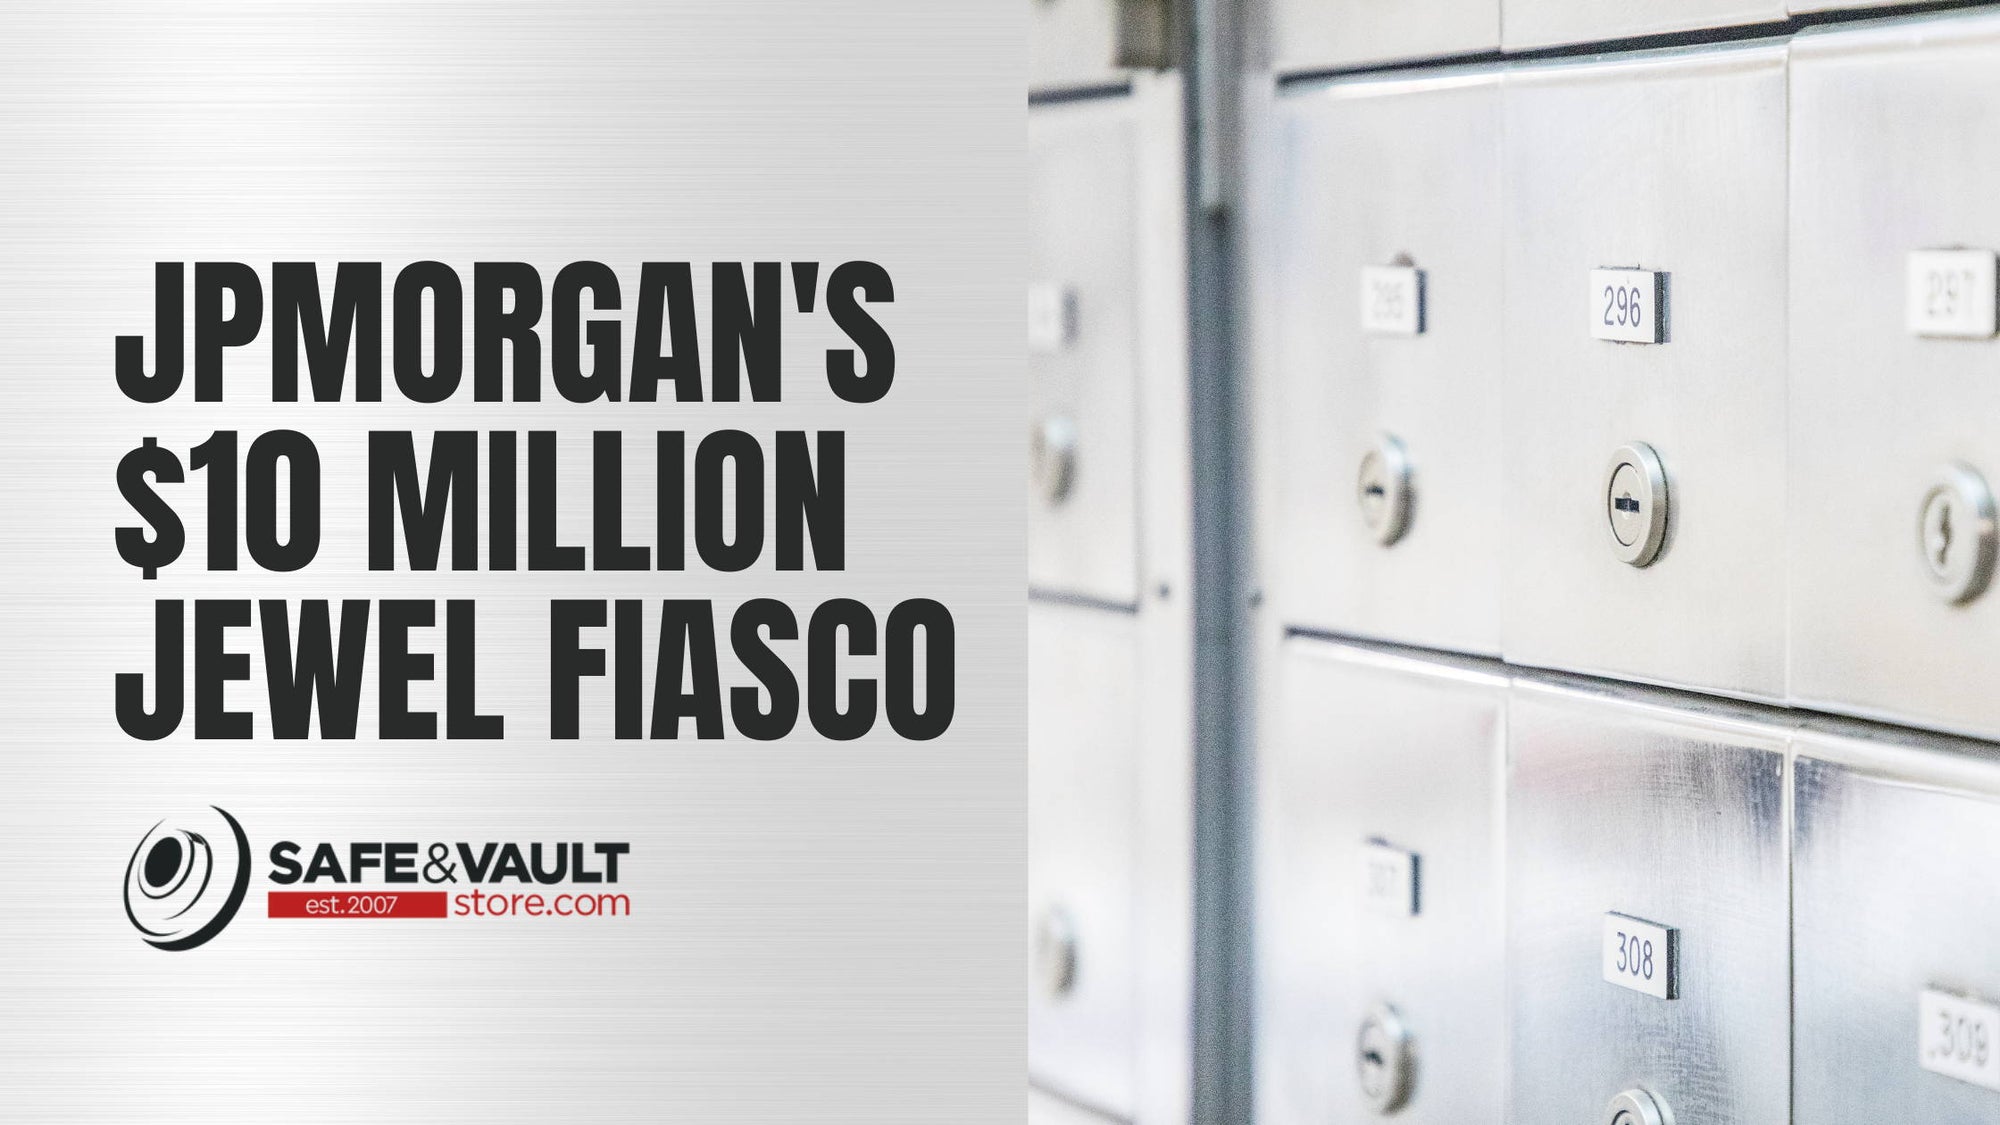 JPMorgan's $10 Million Jewel Fiasco: A Cautionary Tale for Safekeeping Valuables